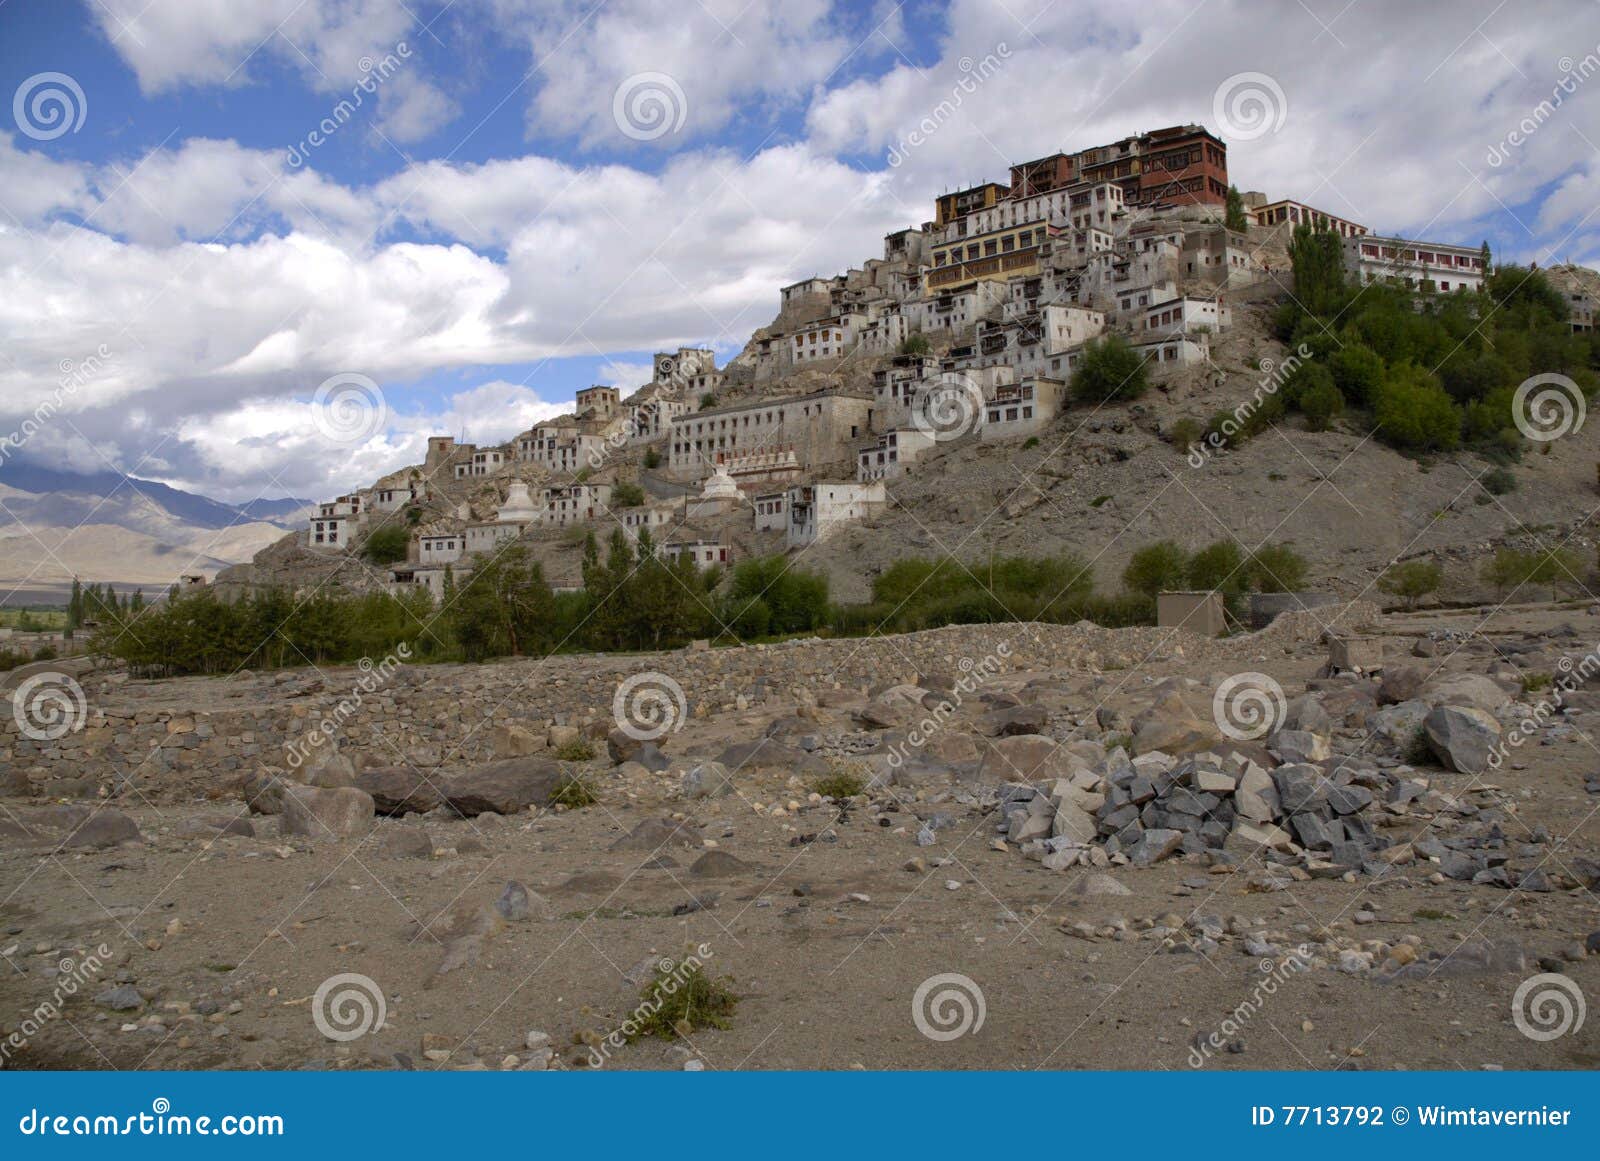 monastery of thikse, ladakh, india